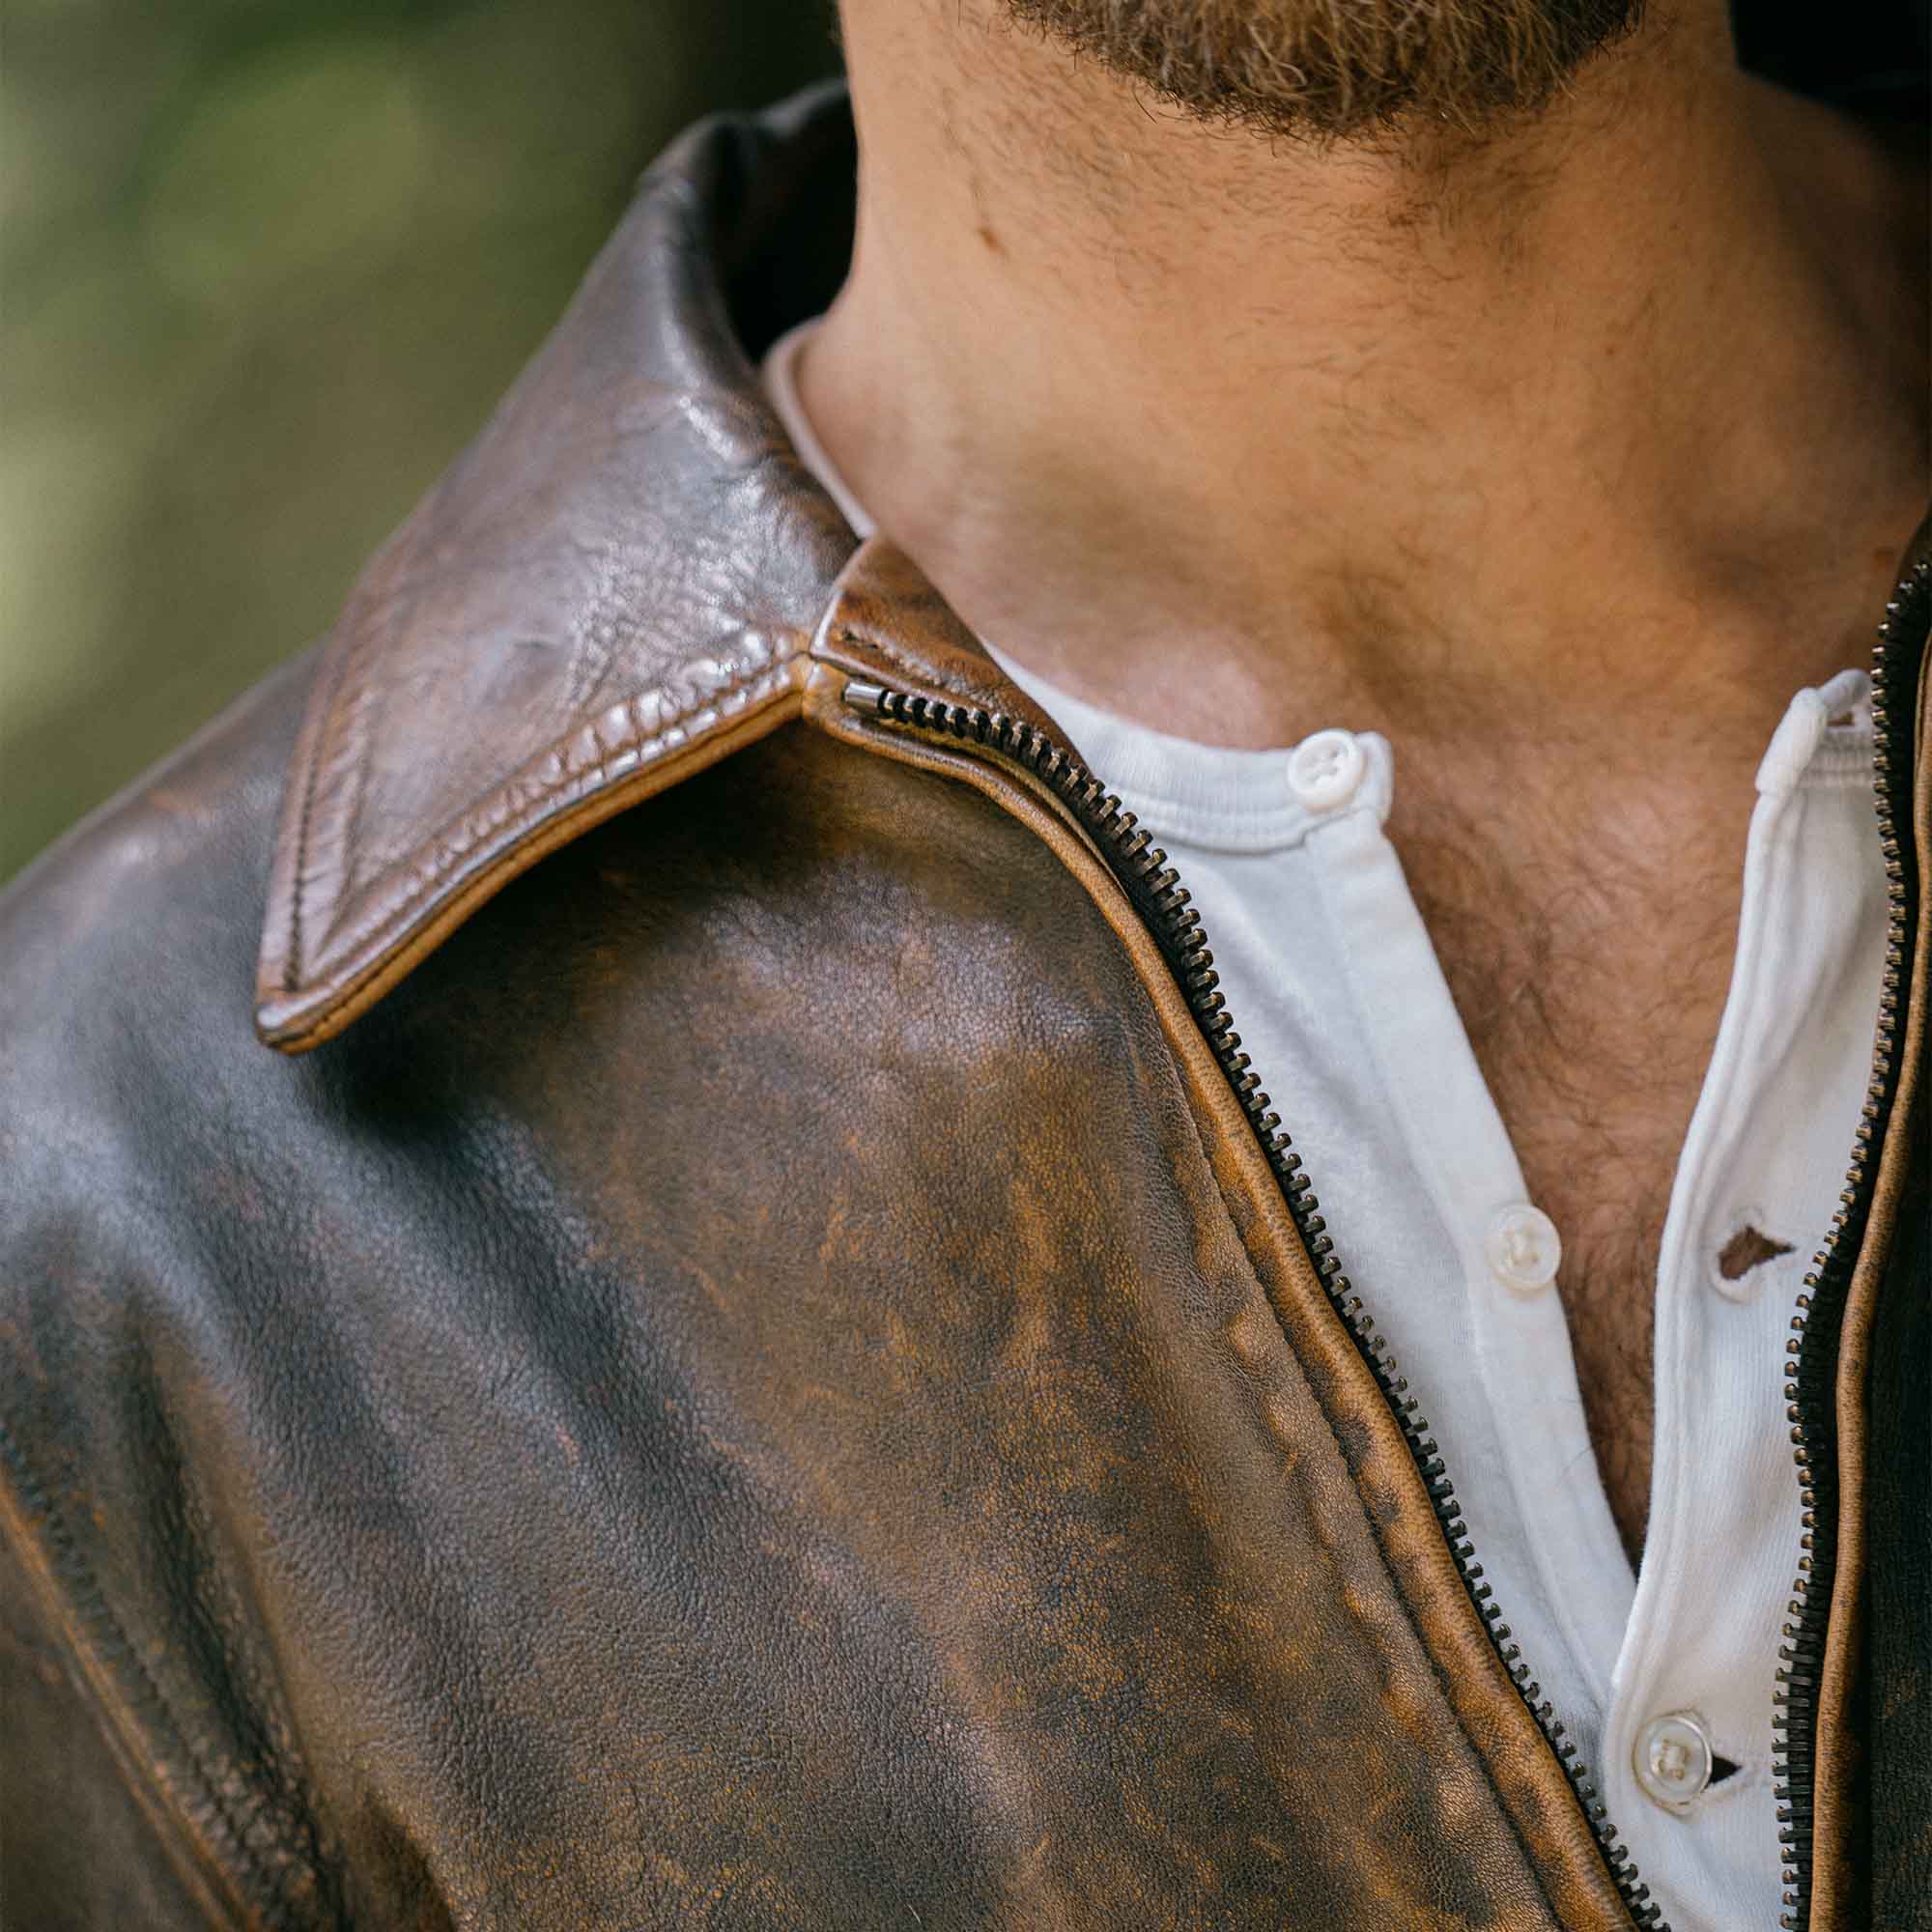 "Varenne" Deserto Leather Jacket